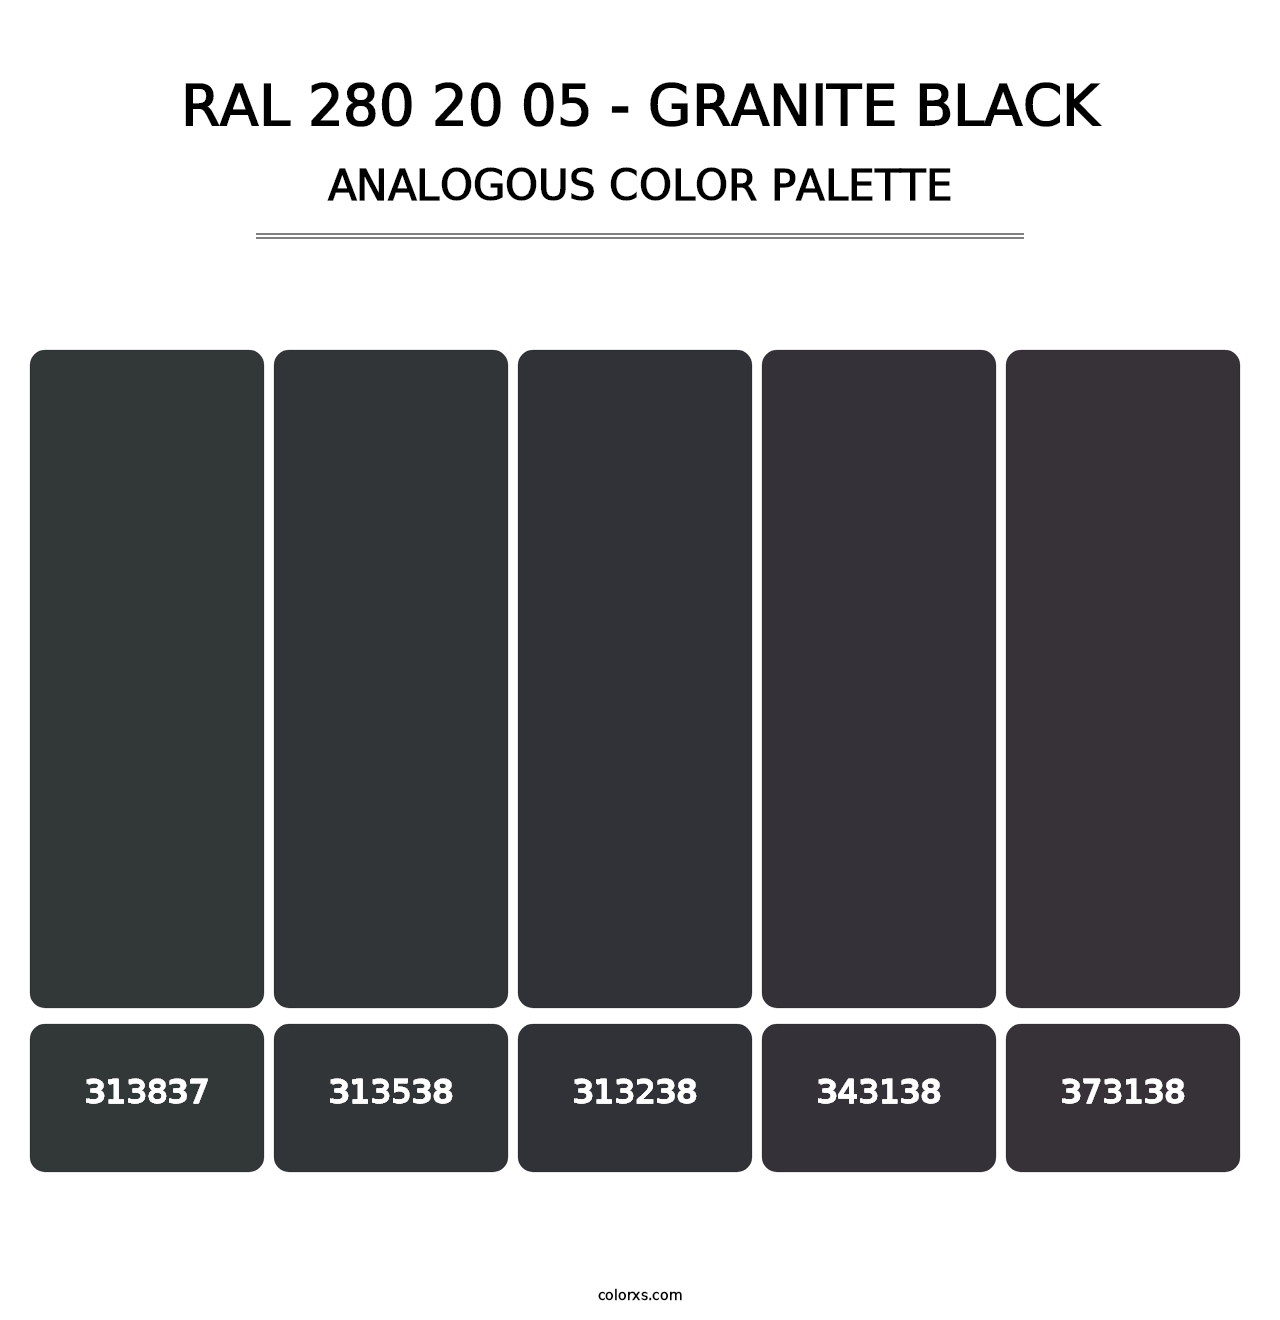 RAL 280 20 05 - Granite Black - Analogous Color Palette